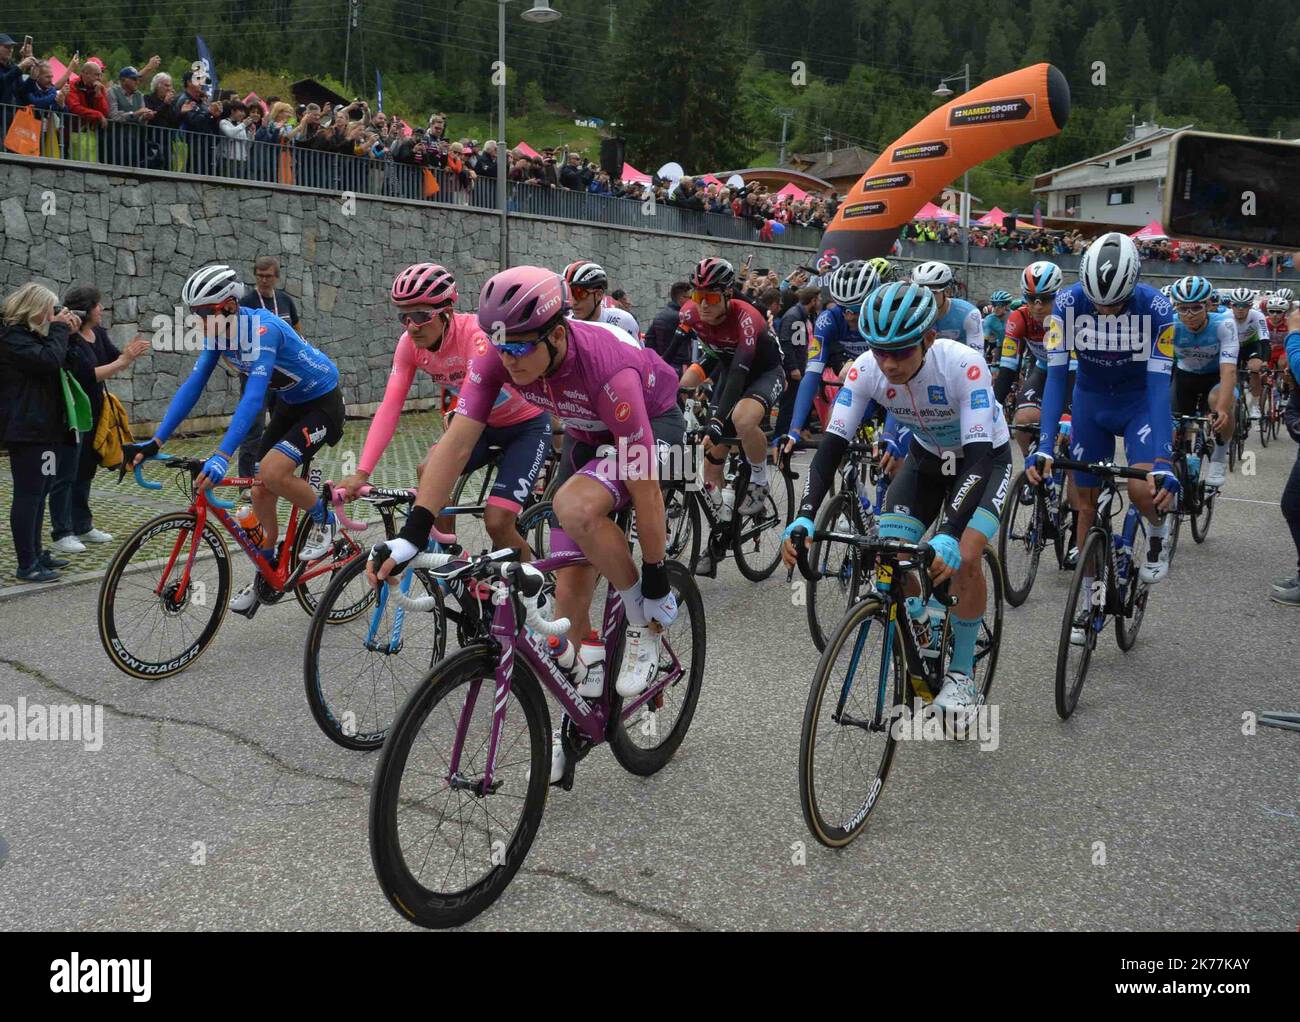 ©Andre Huber/MAXPPP ; Giro d'Italia - Radtour durch Italien Etappe 17. Commezzadura, Antholz, Antholz. Abfahrt am 29/05/2019 in Commezzadura, Italien. Im Bild: Arnaud Demare (Fra) © Andre Huber / Maxppp Stockfoto